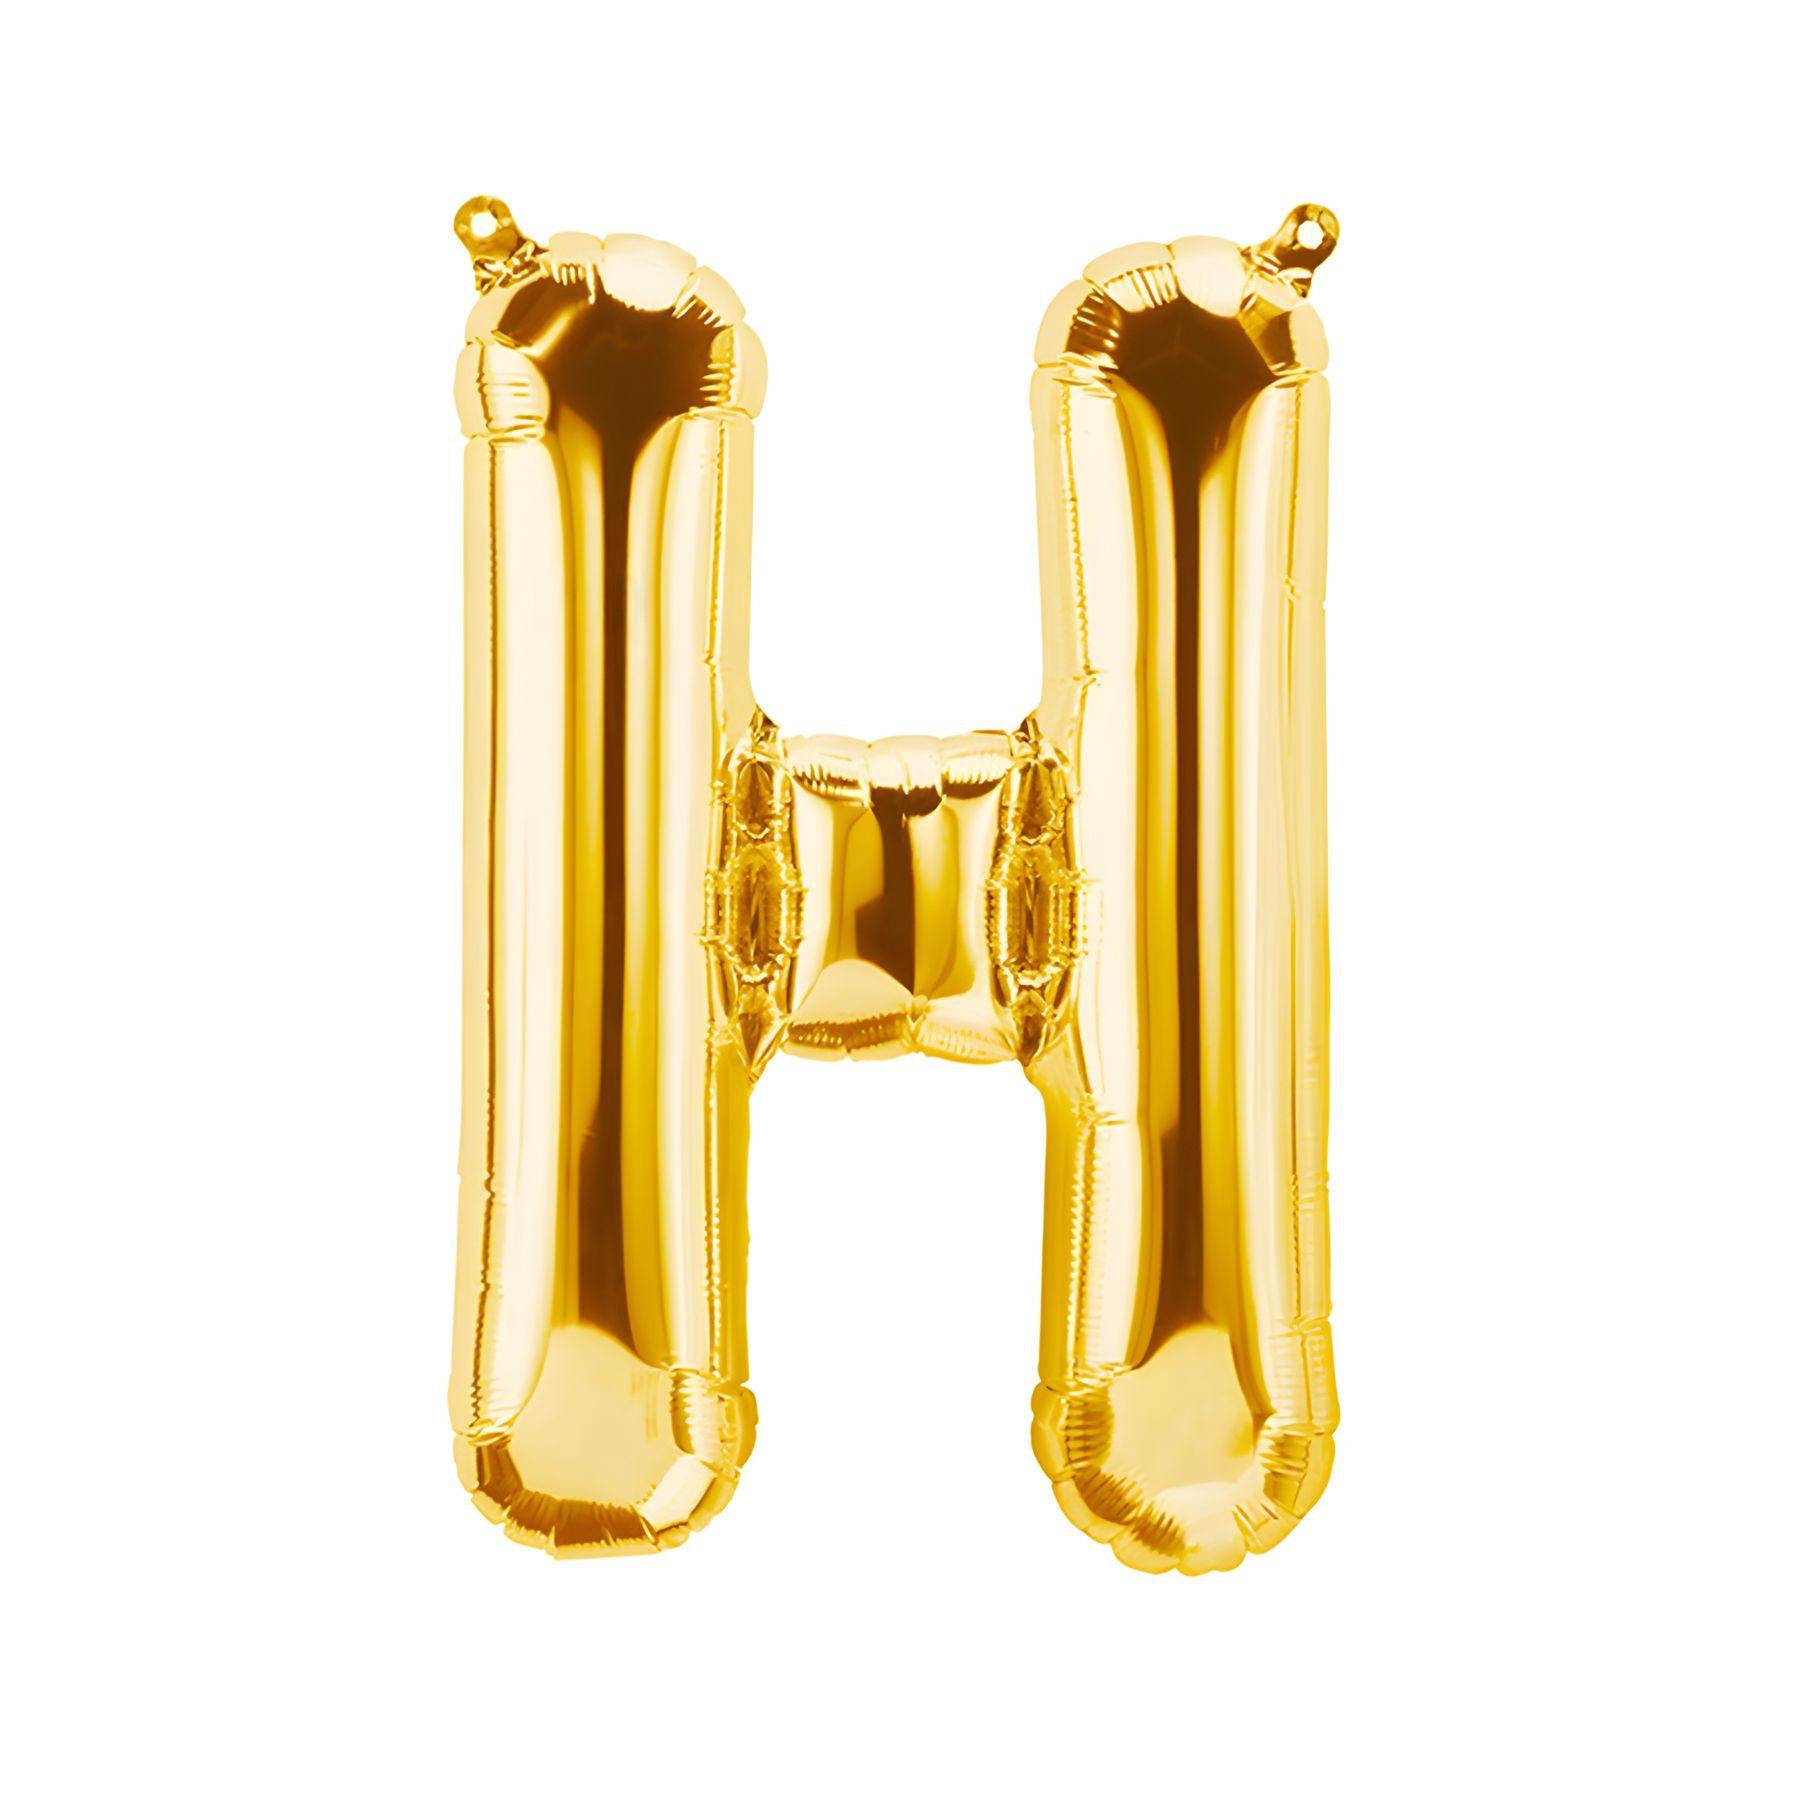 Folienballon Buchstabe H, gold, ca. 80 cm, für Luftbefüllung